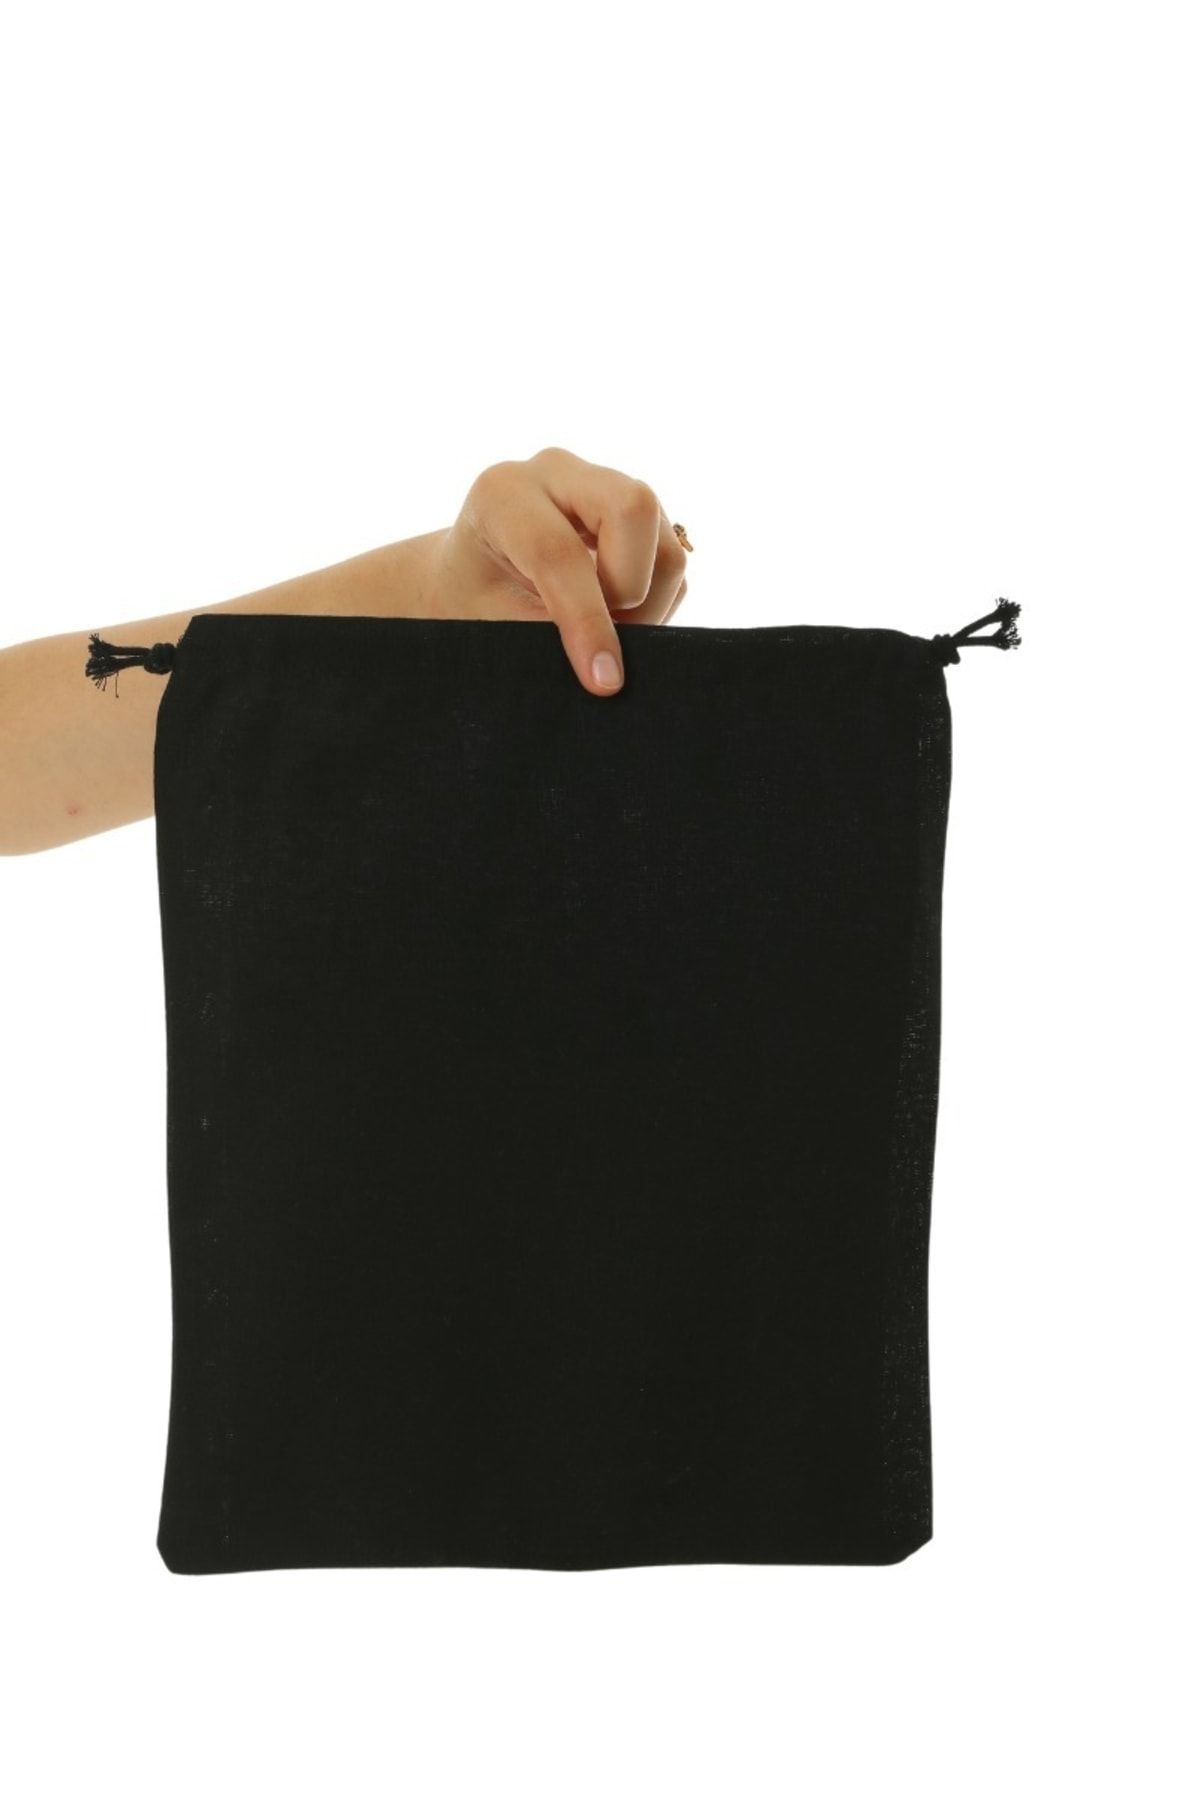 Vintage Black Juicy Couture Purse Handbag Tote Bag Terry Cloth Extra Large  | eBay